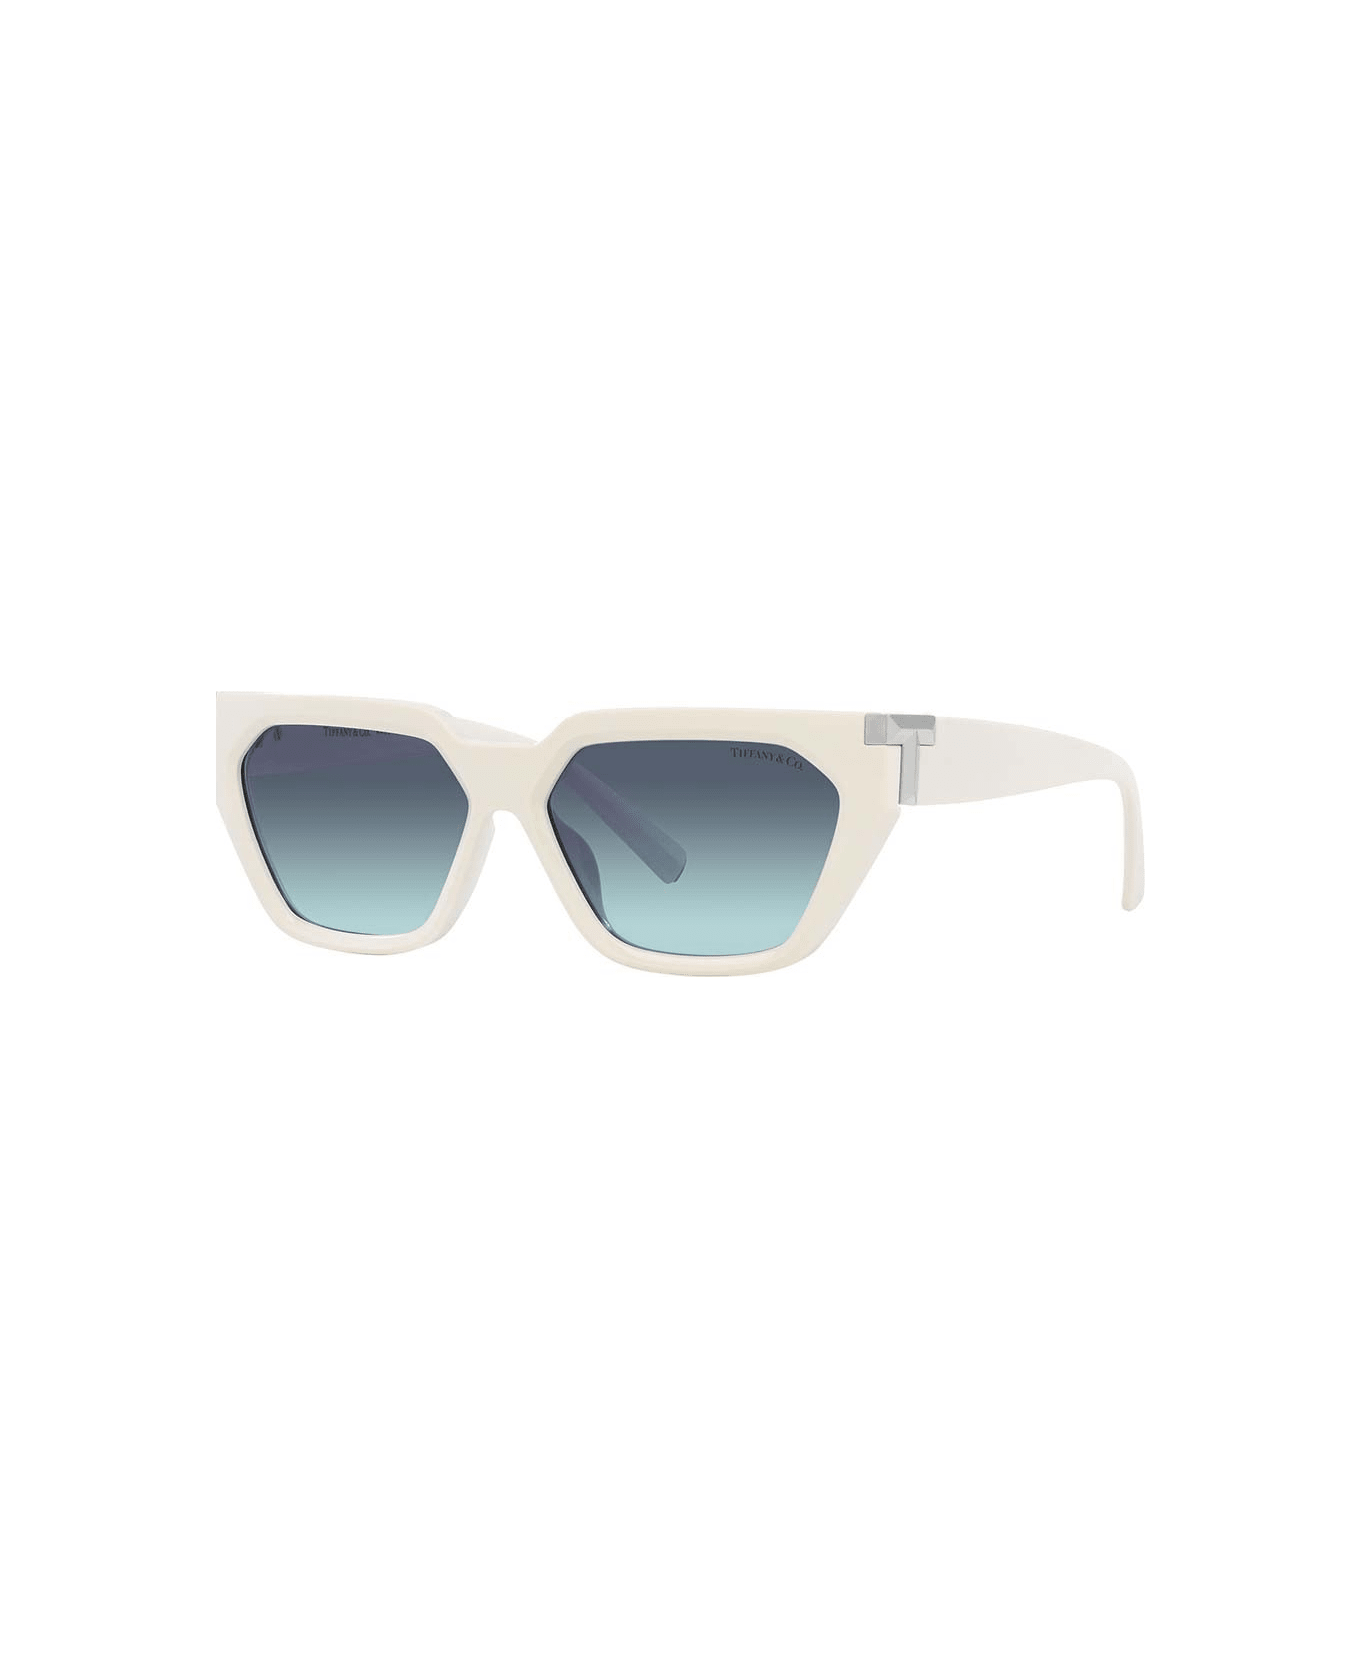 Tiffany & Co. Sunglasses - Bianco/Azzurro